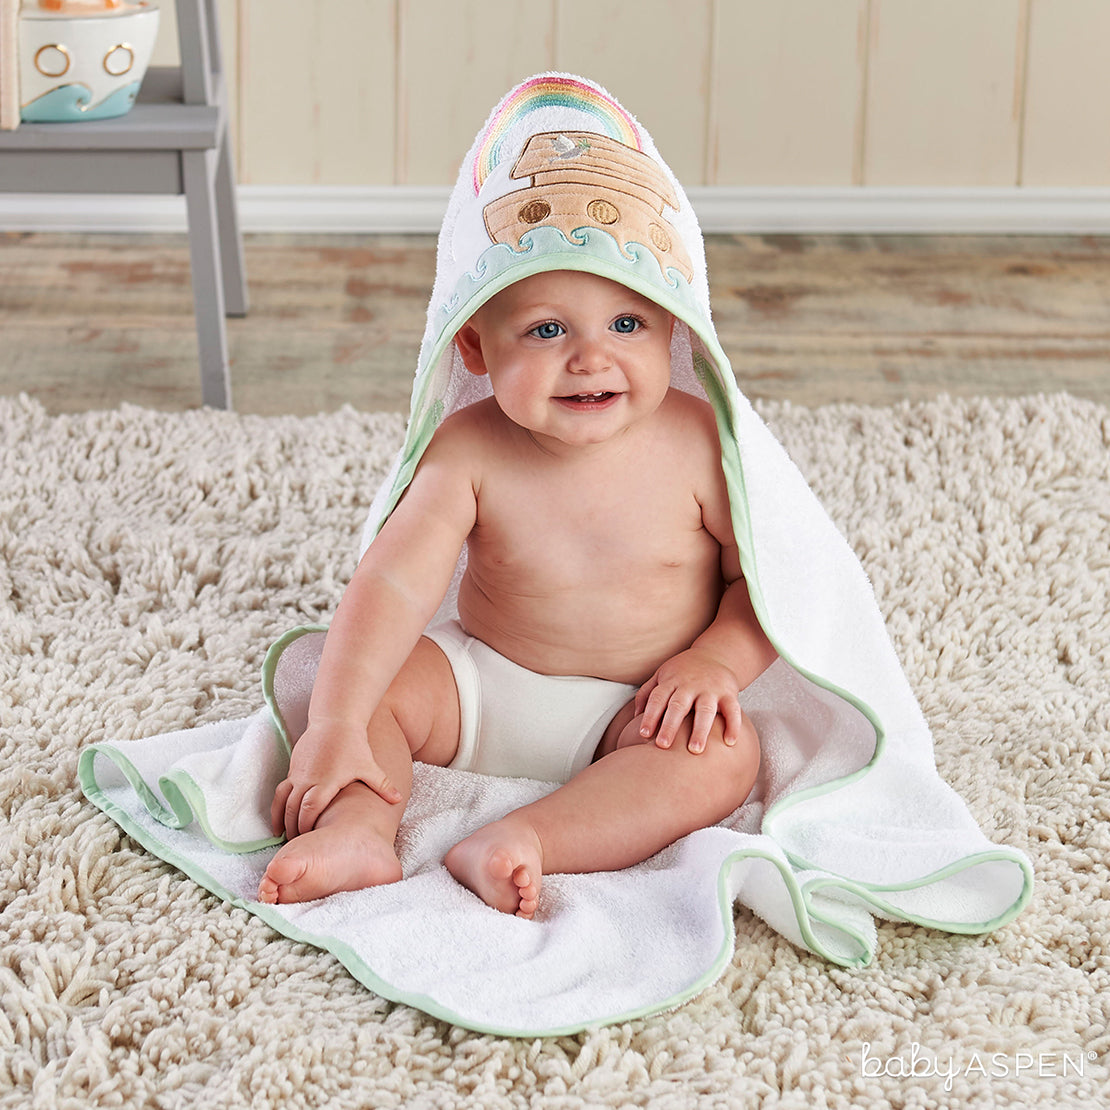 Noah's Ark Hooded Towel | The Cutest Baby Hooded Towels | Baby Aspen